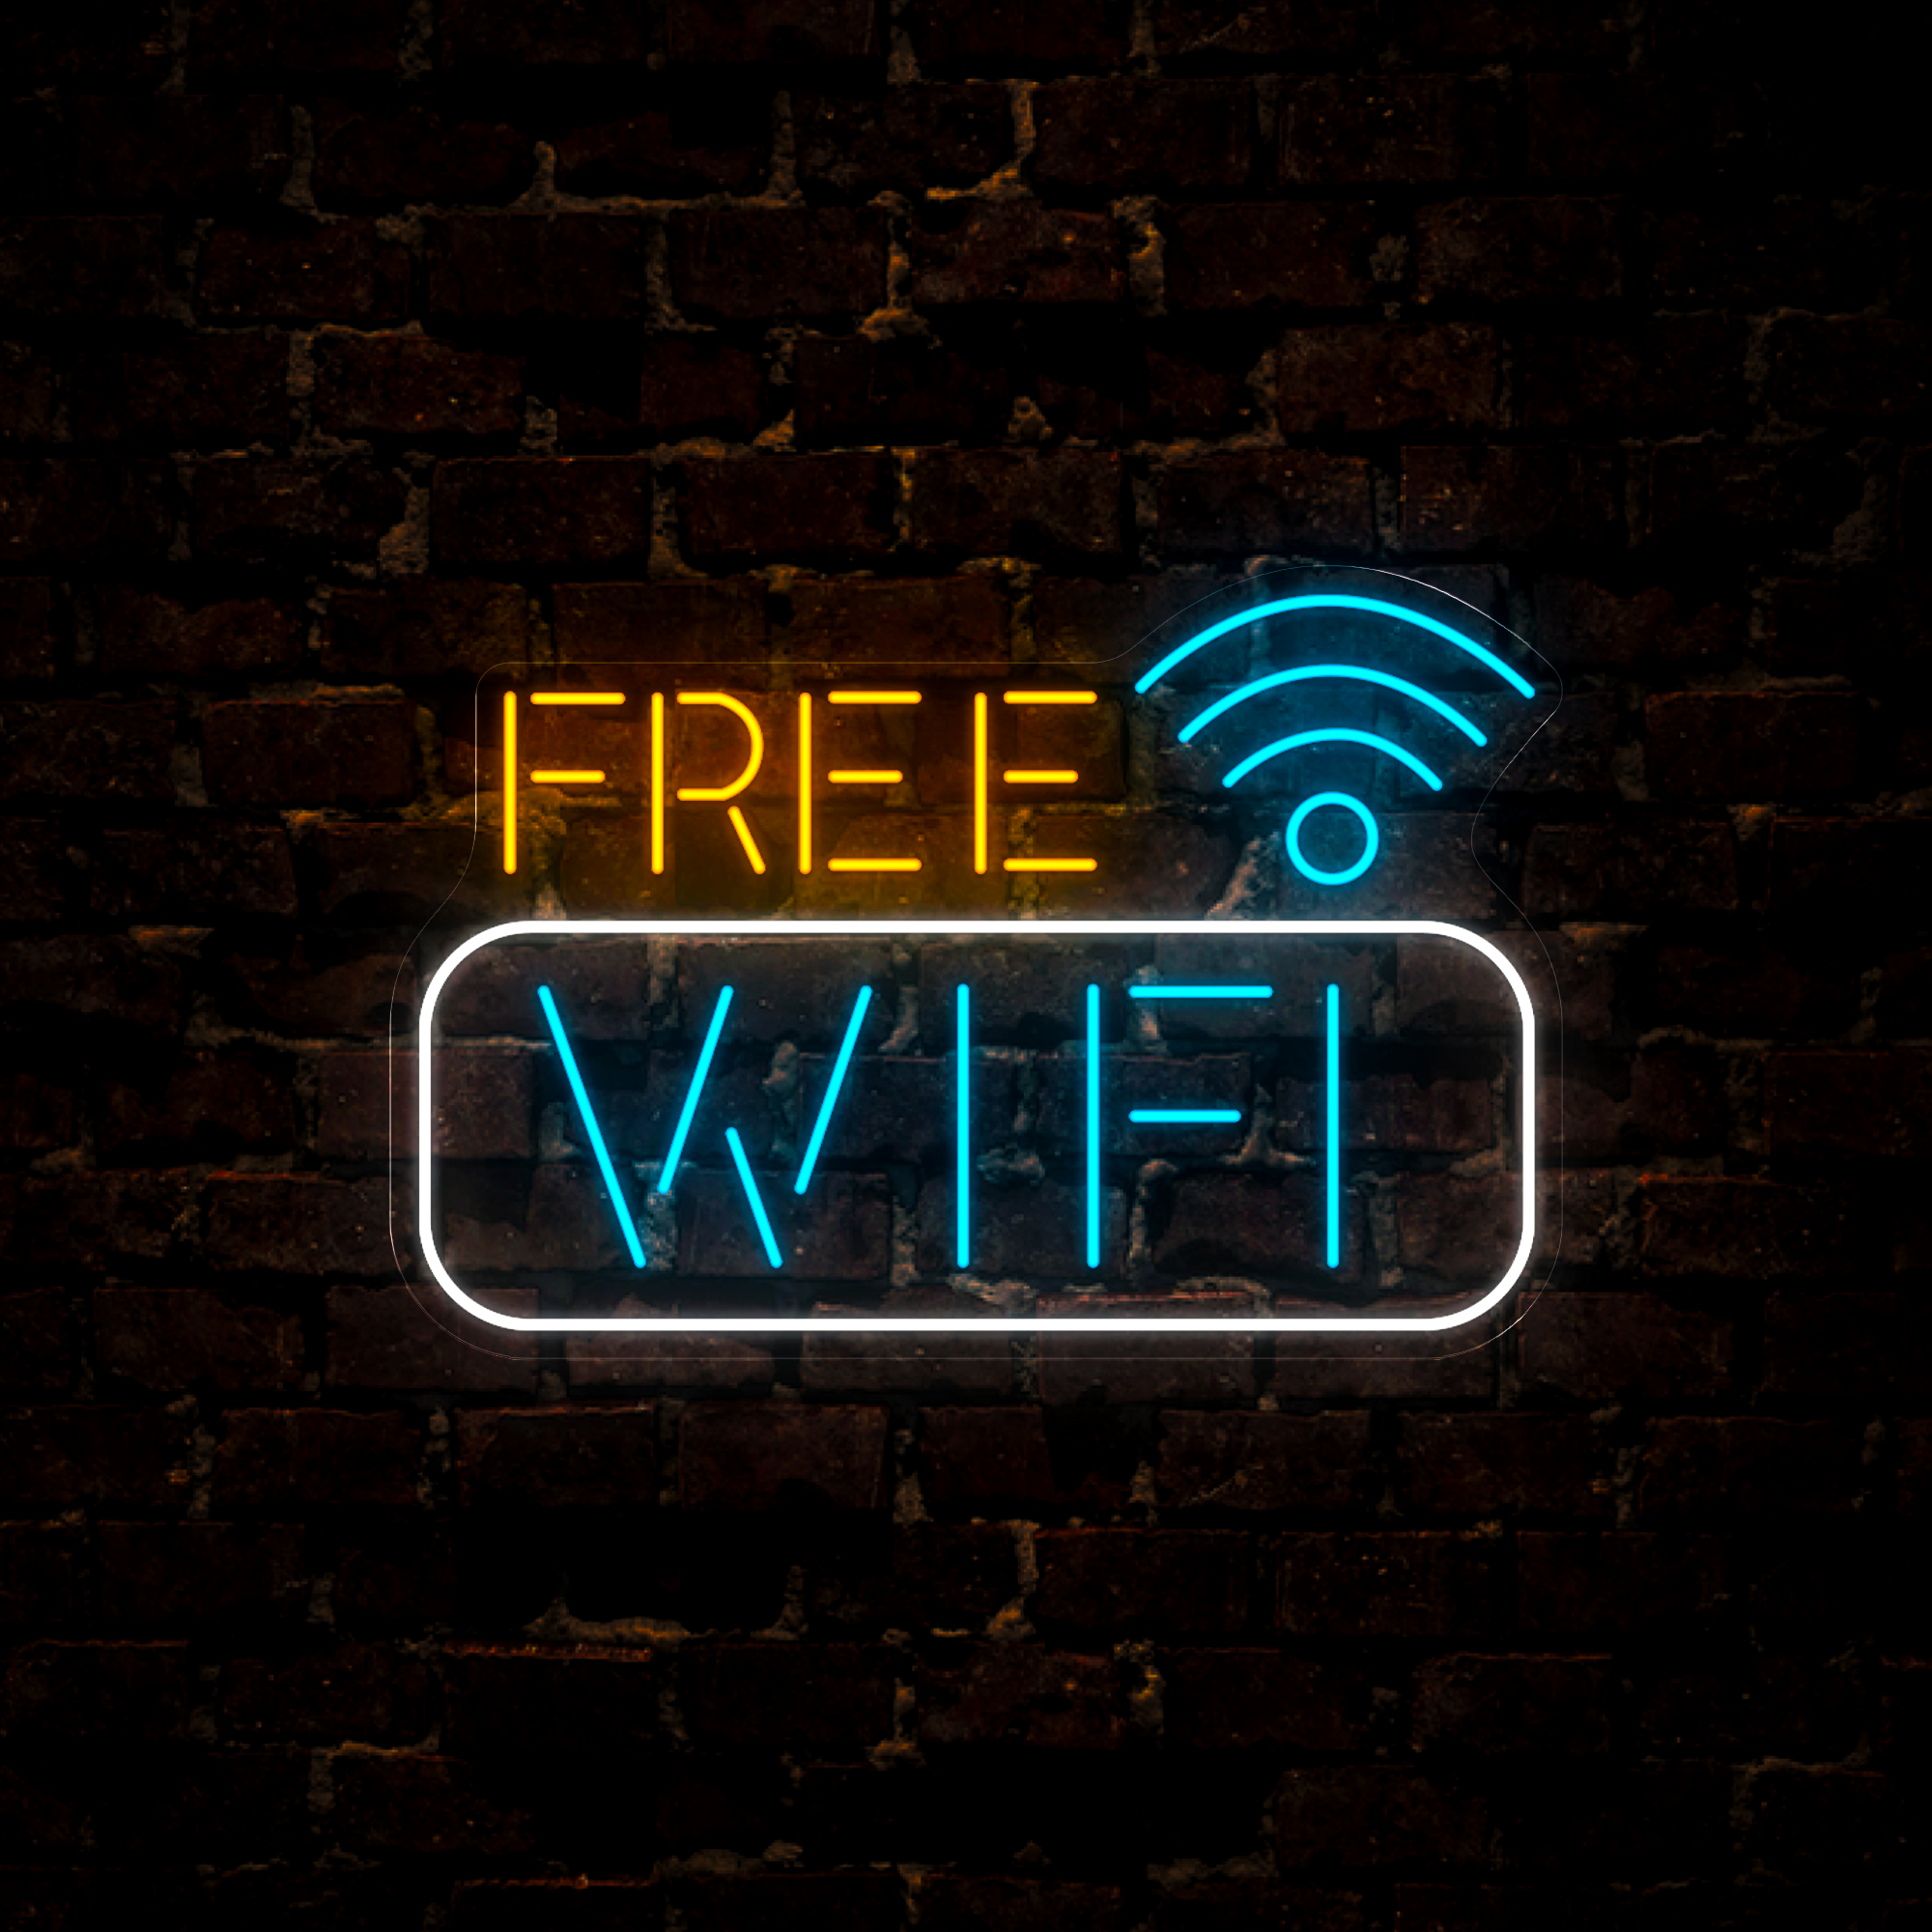 Free Wifi Neon Sign